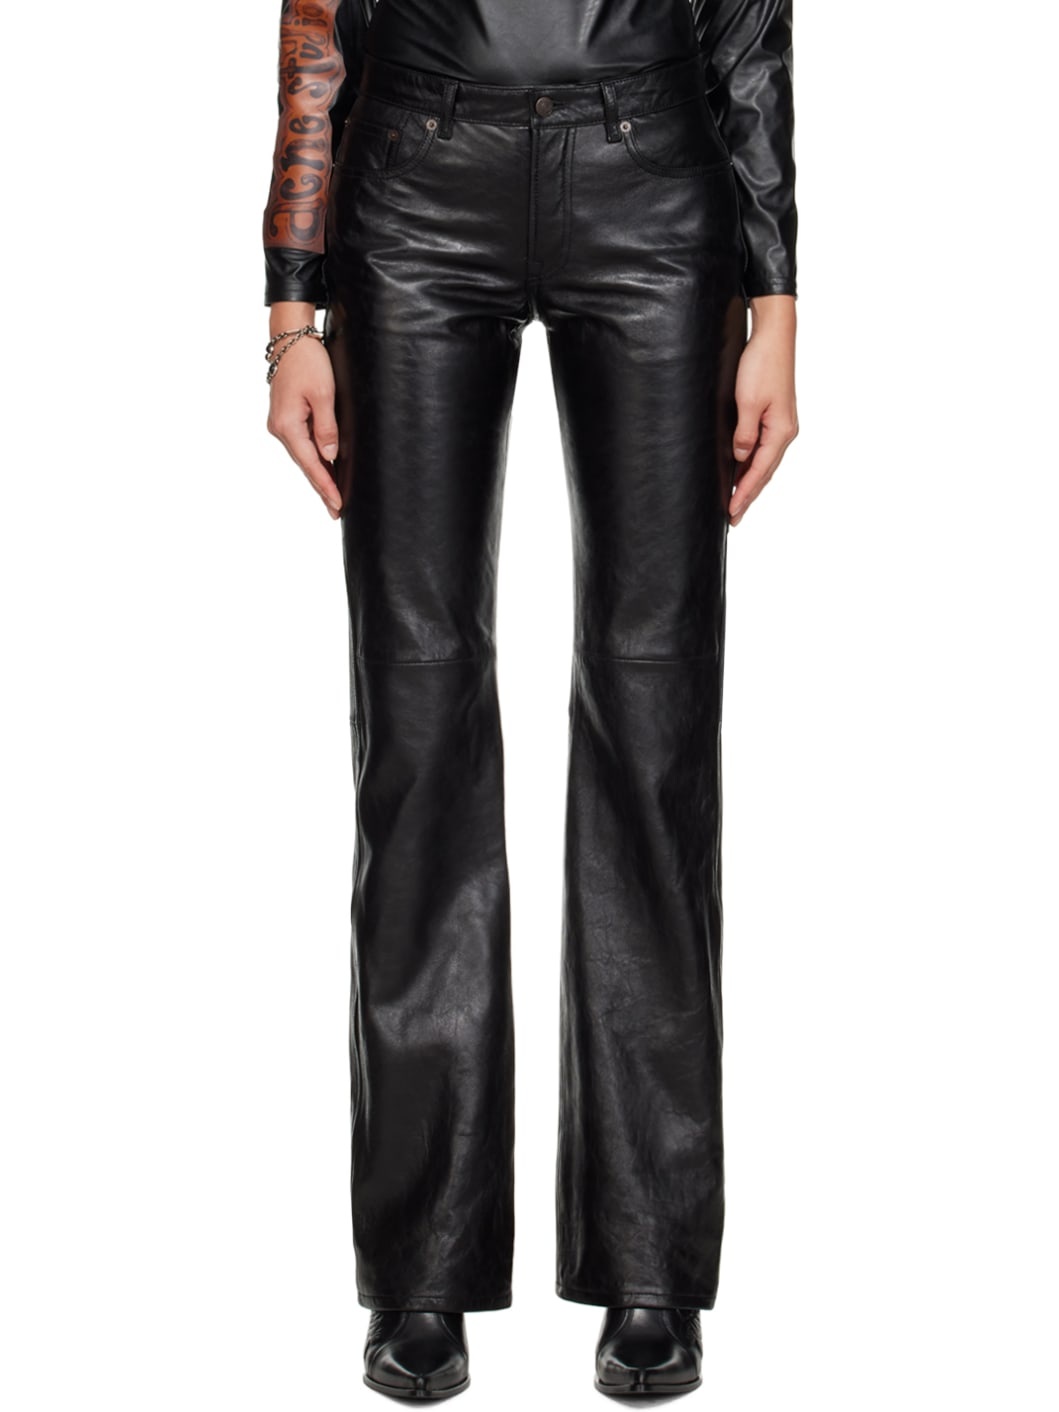 Black Paneled Leather Pants - 1